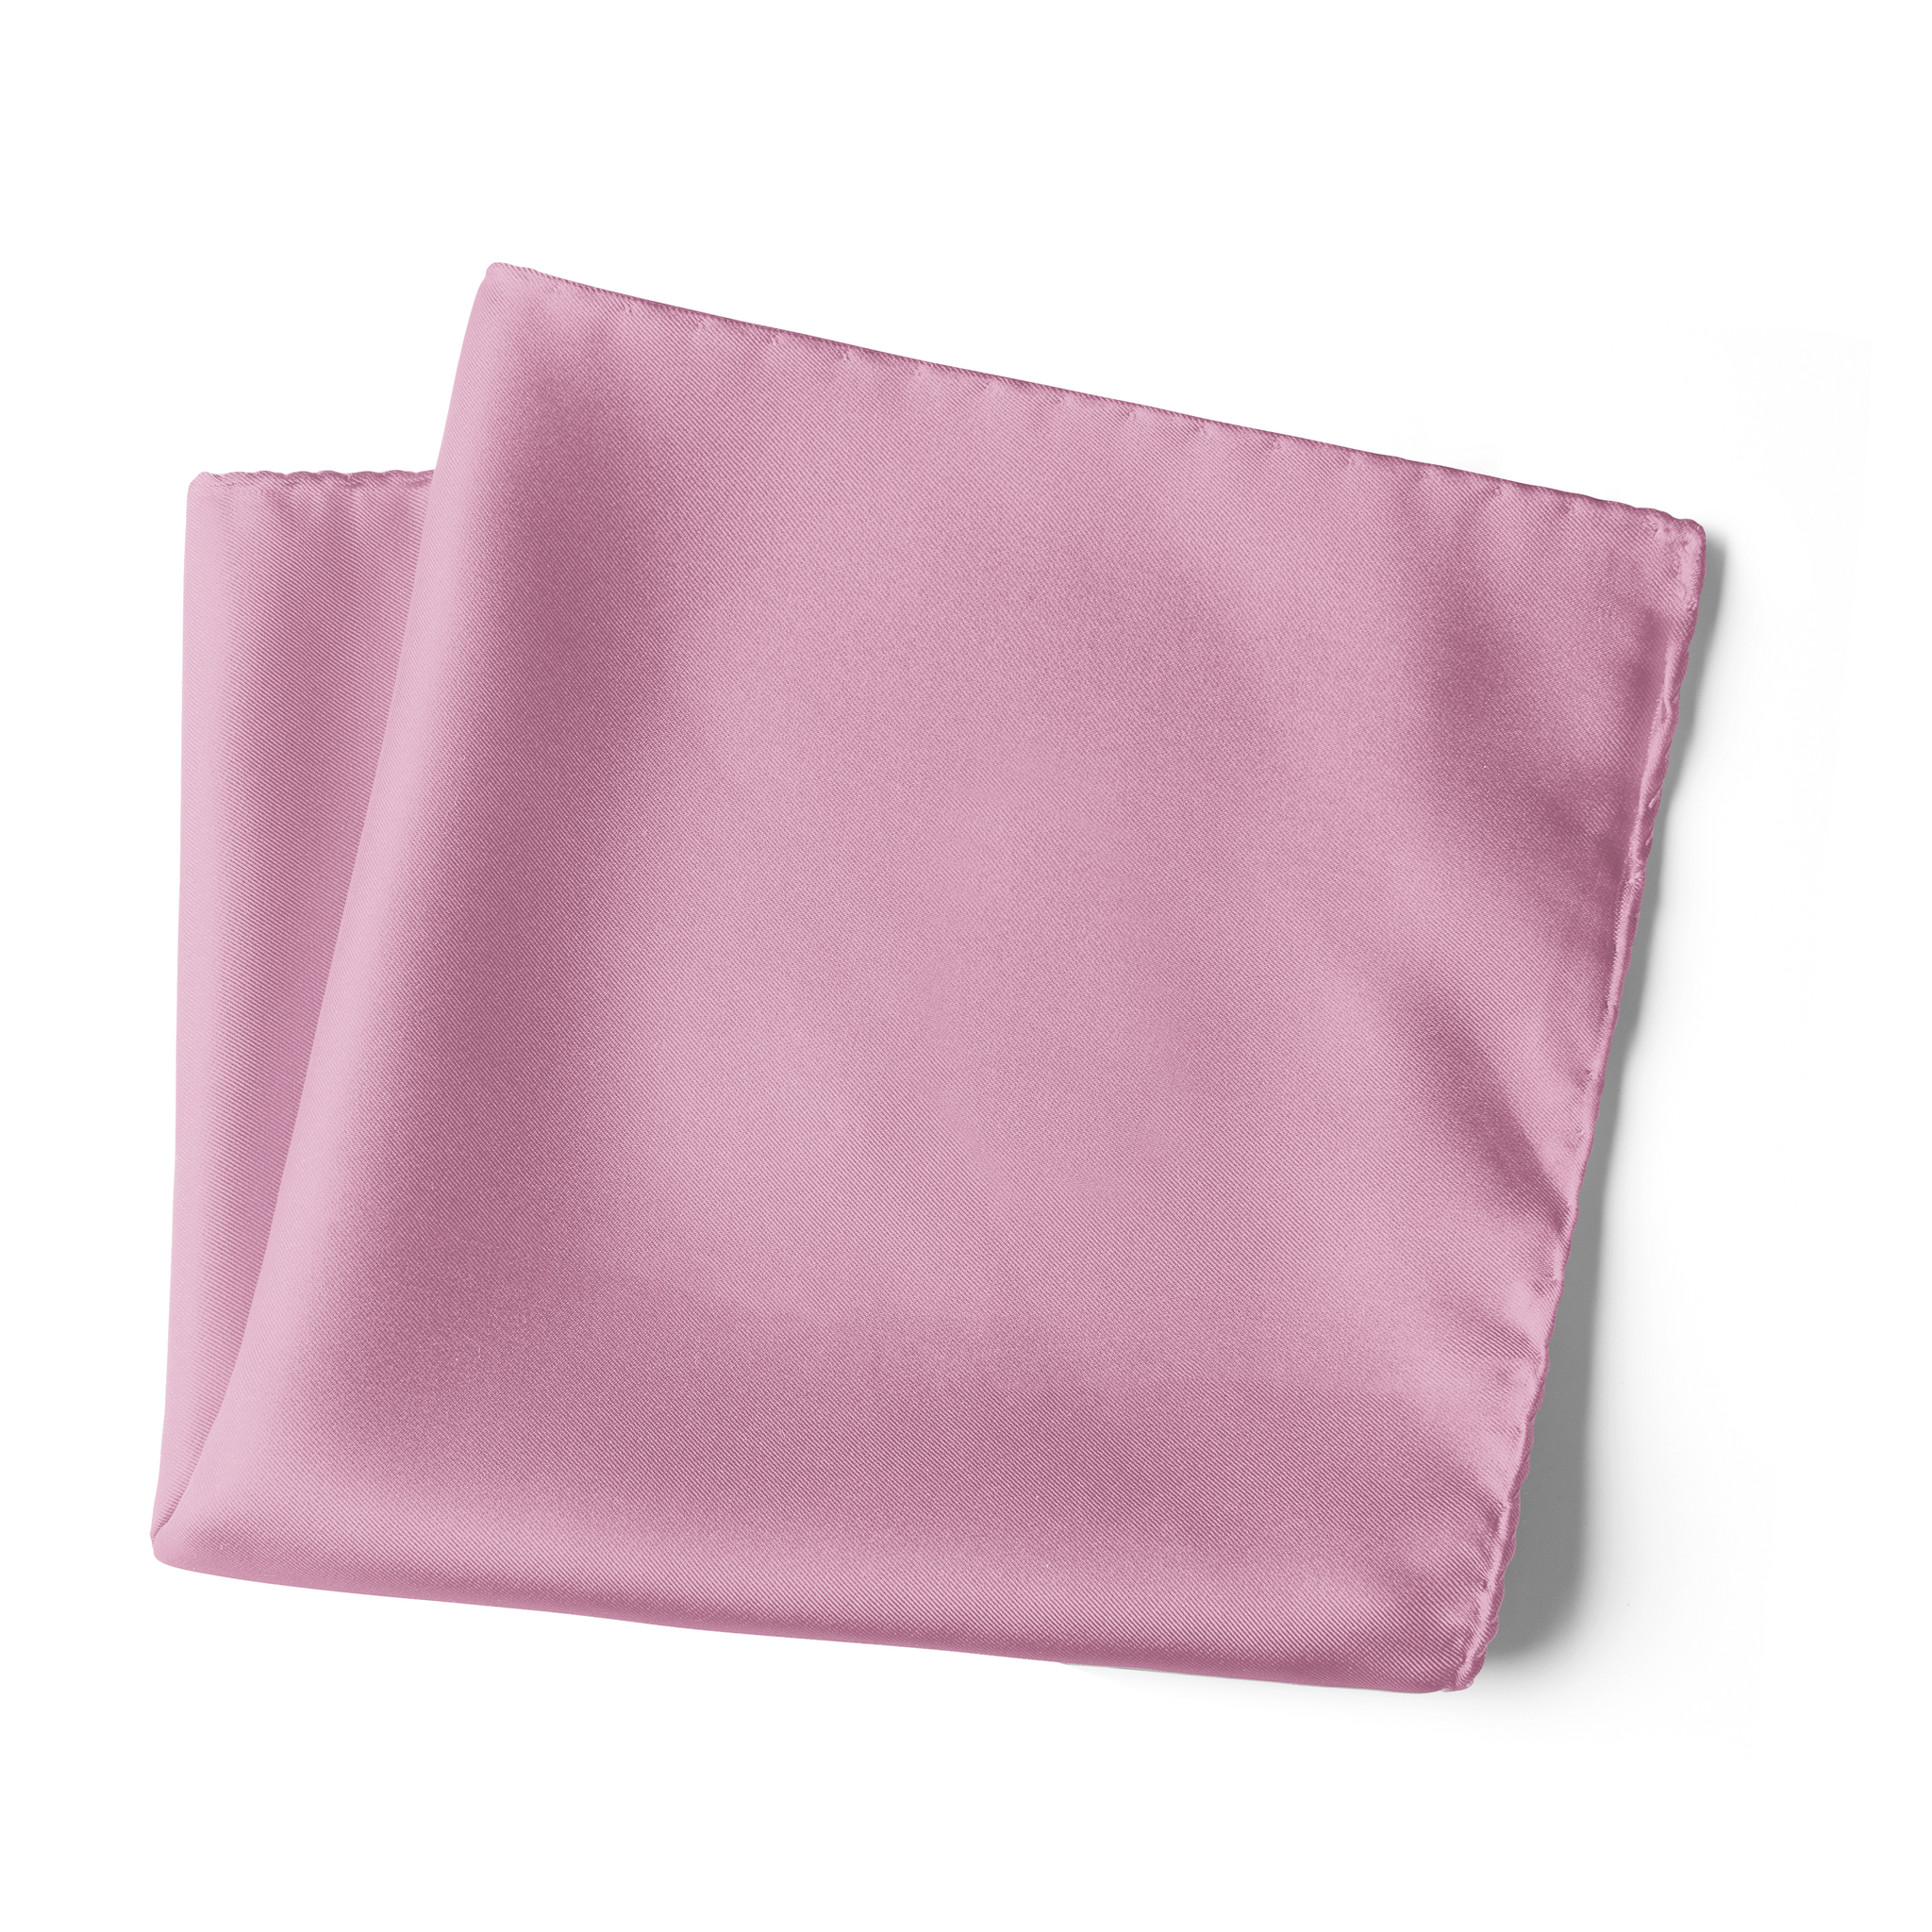 Chokore Pink Pocket Square - the Solids line